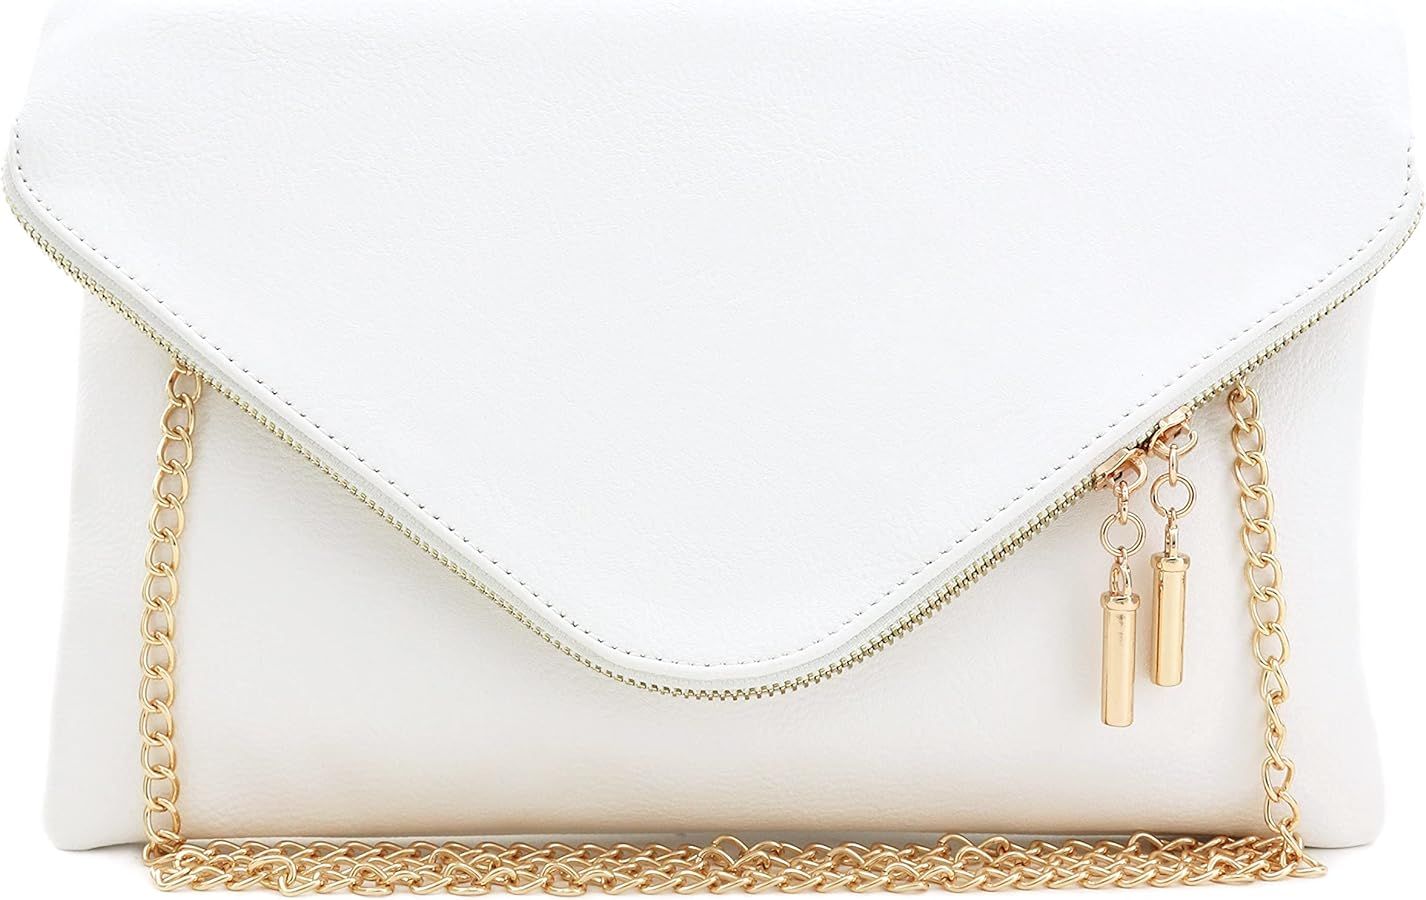 FashionPuzzle Large Envelope Clutch Bag with Chain Strap (Oversize) | Amazon (US)